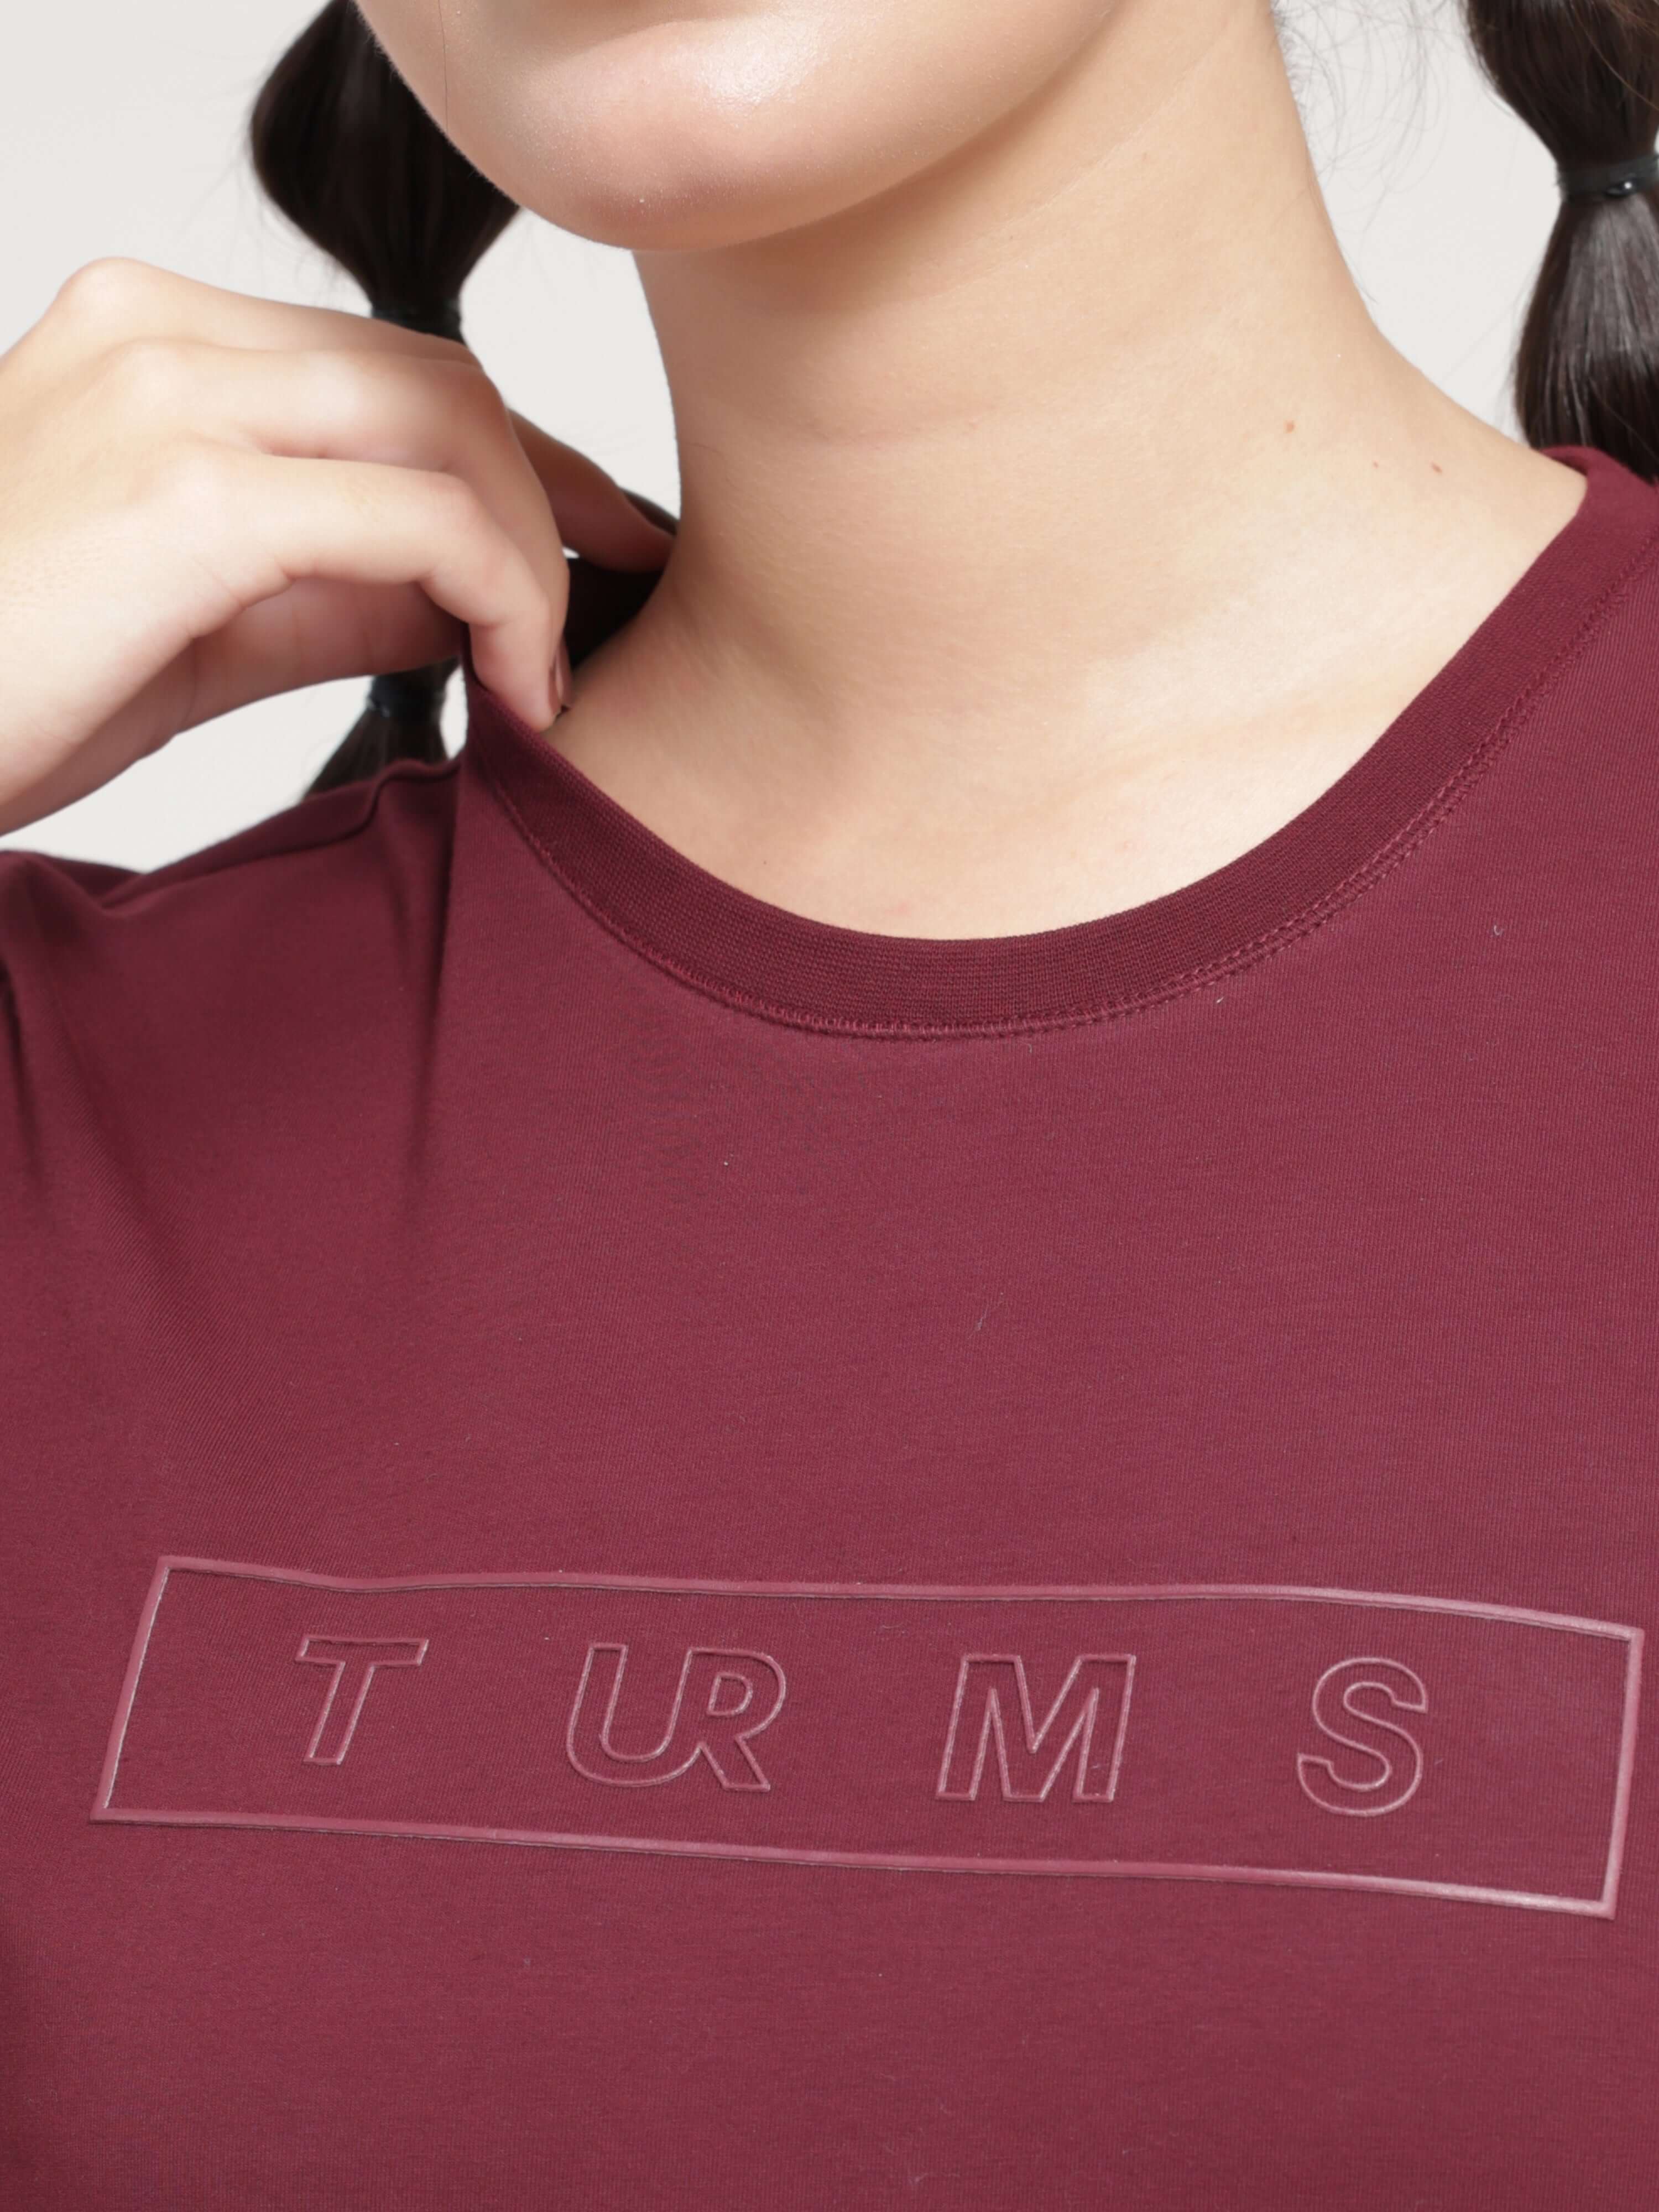 Burgundy Elite Turms T-shirt, anti-stain, anti-odour, stretchable, tailored fit, crew neck, premium cotton, intelligent apparel, trendy women's fashion